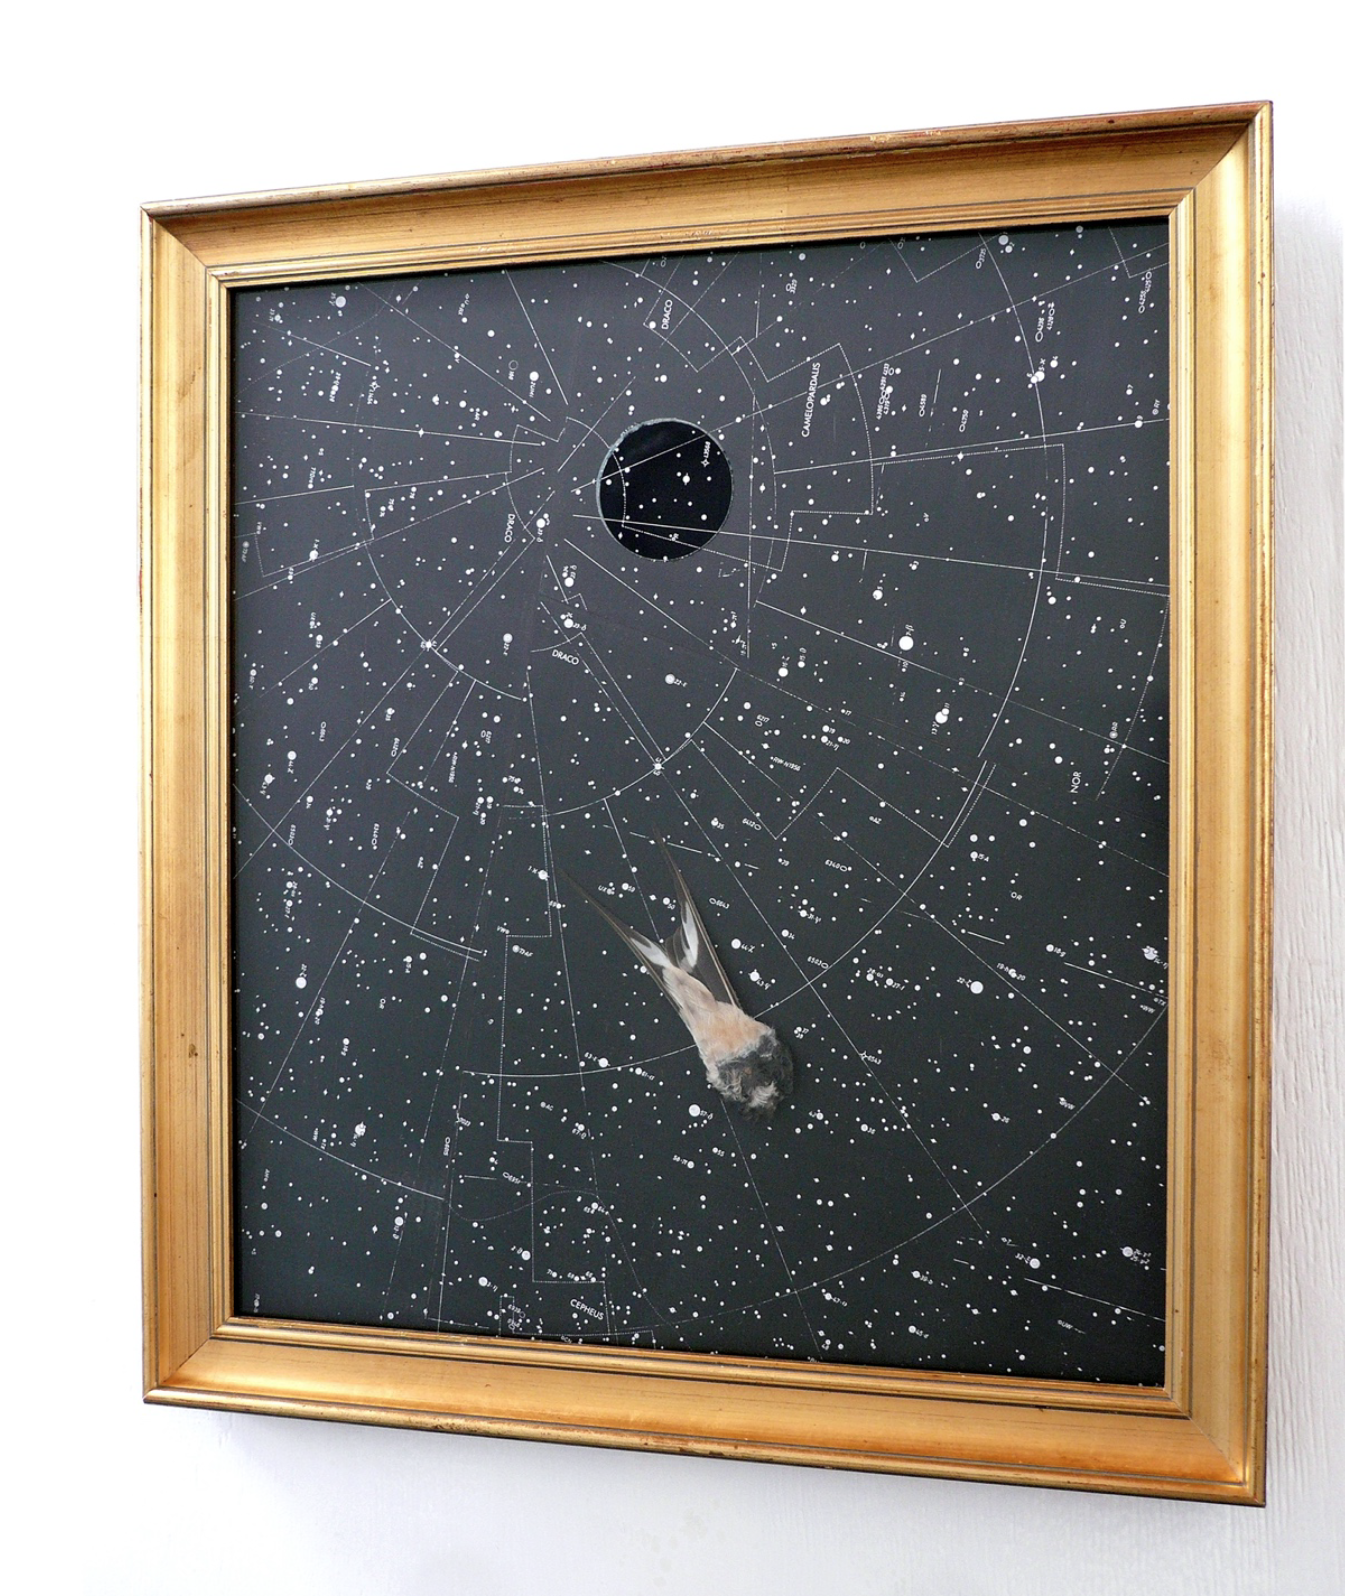 Wido Blokland, Occhio di Dio - 2017 star maps, swallow tail on board, cut glass, frame 42 x 38 cm